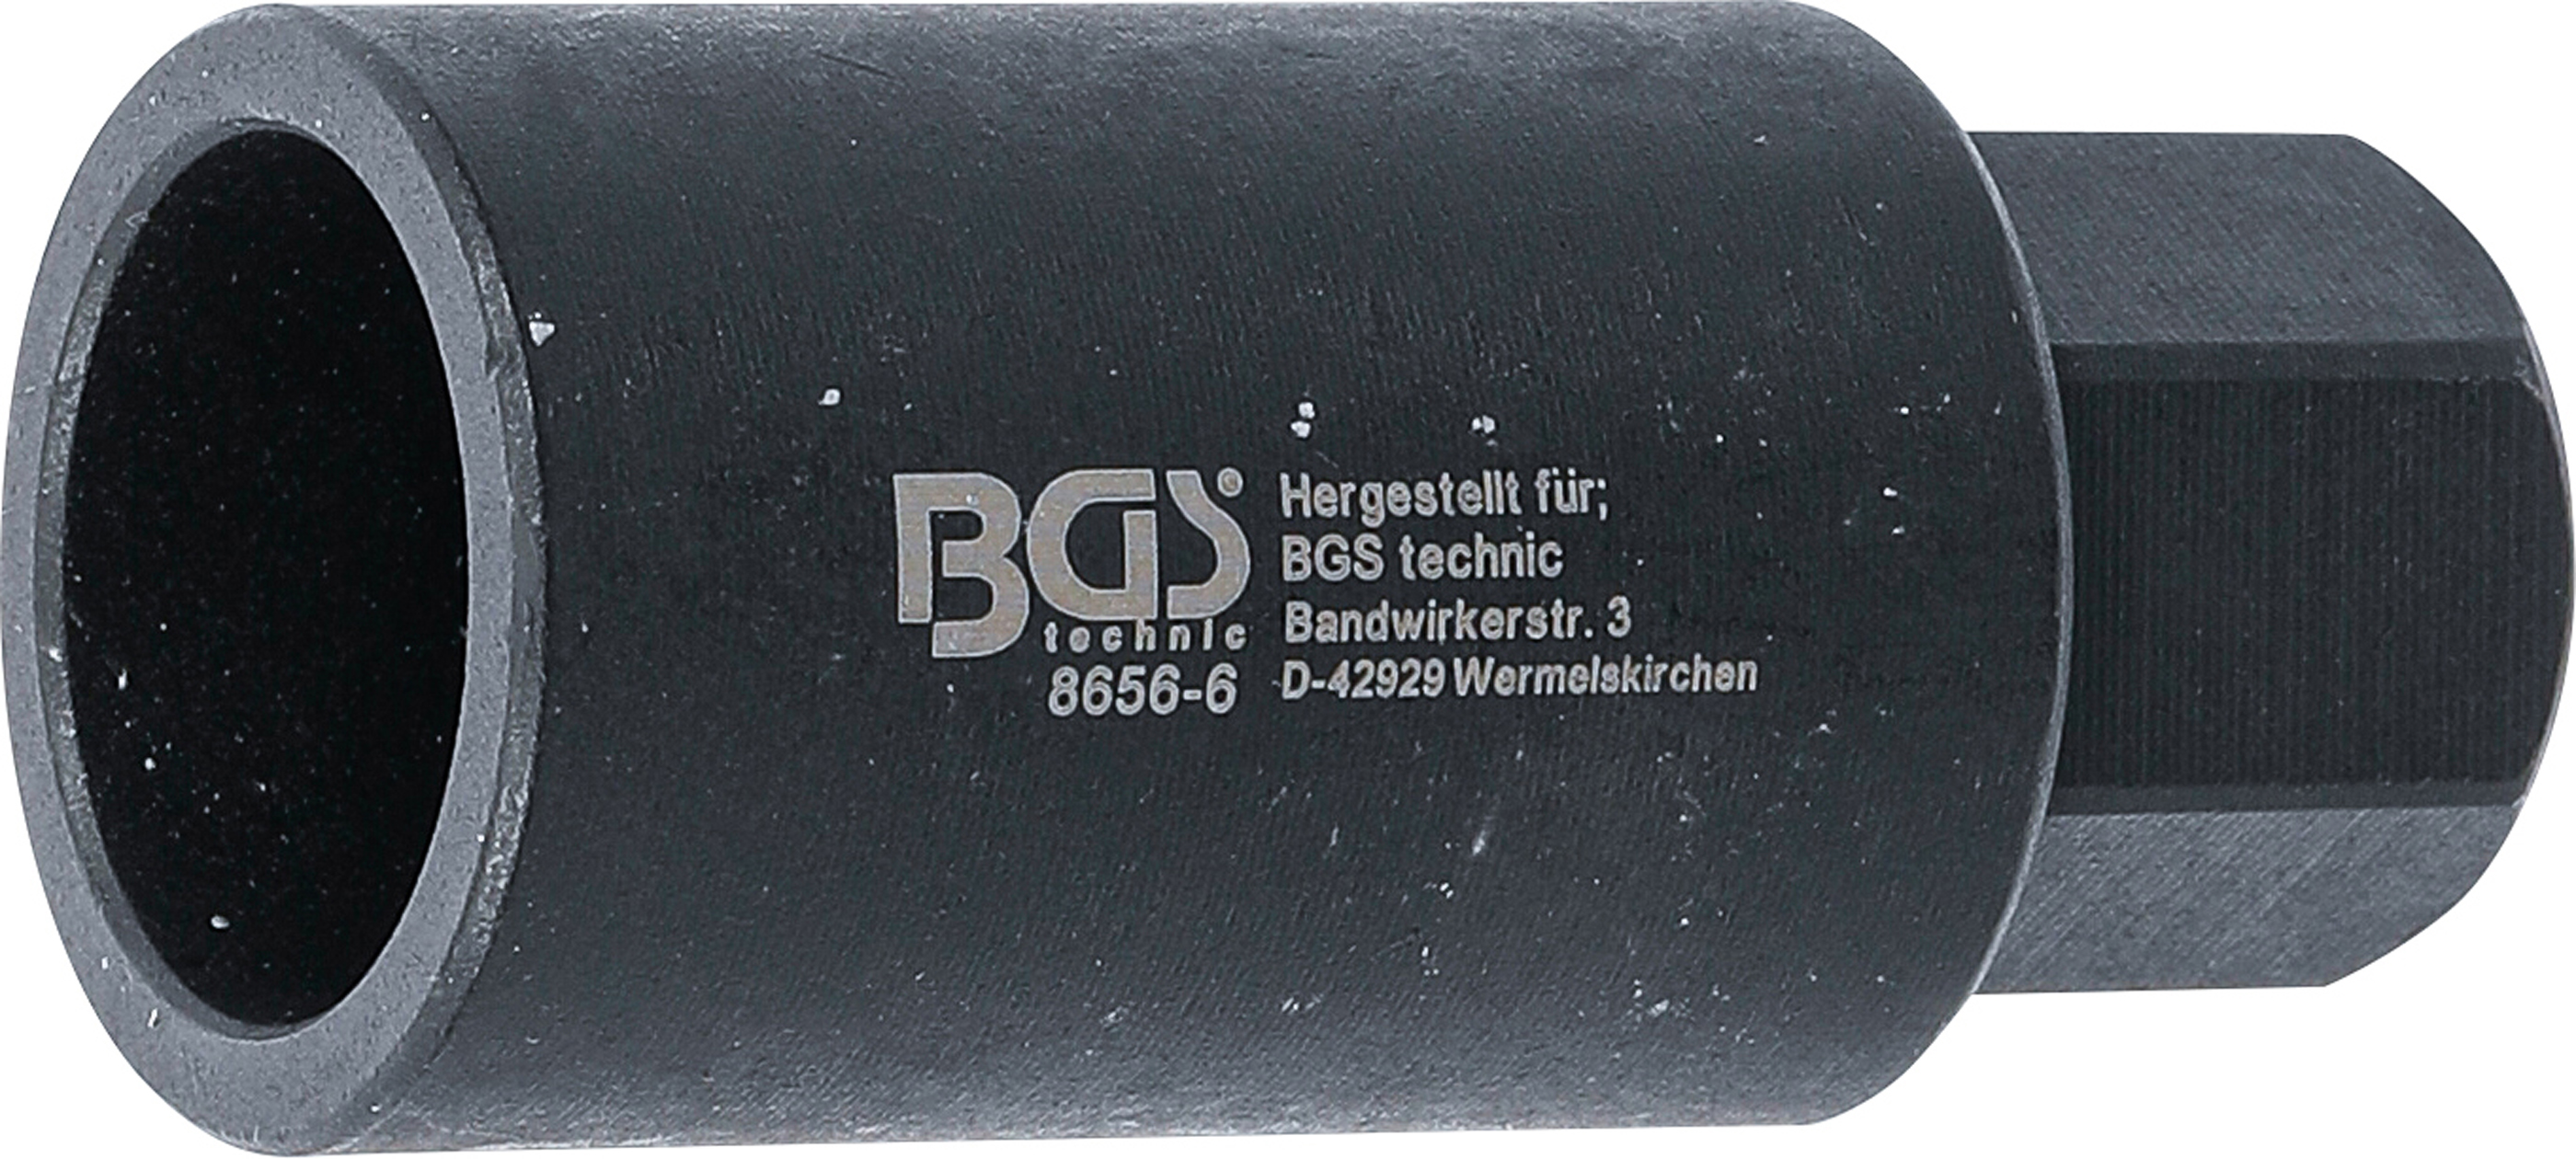 BGS 8656-6 Tubulara conica speciala pentru prezoane de roti deteriorate si antifurt de roata, Ø 21,6 x Ø 19,7 mm